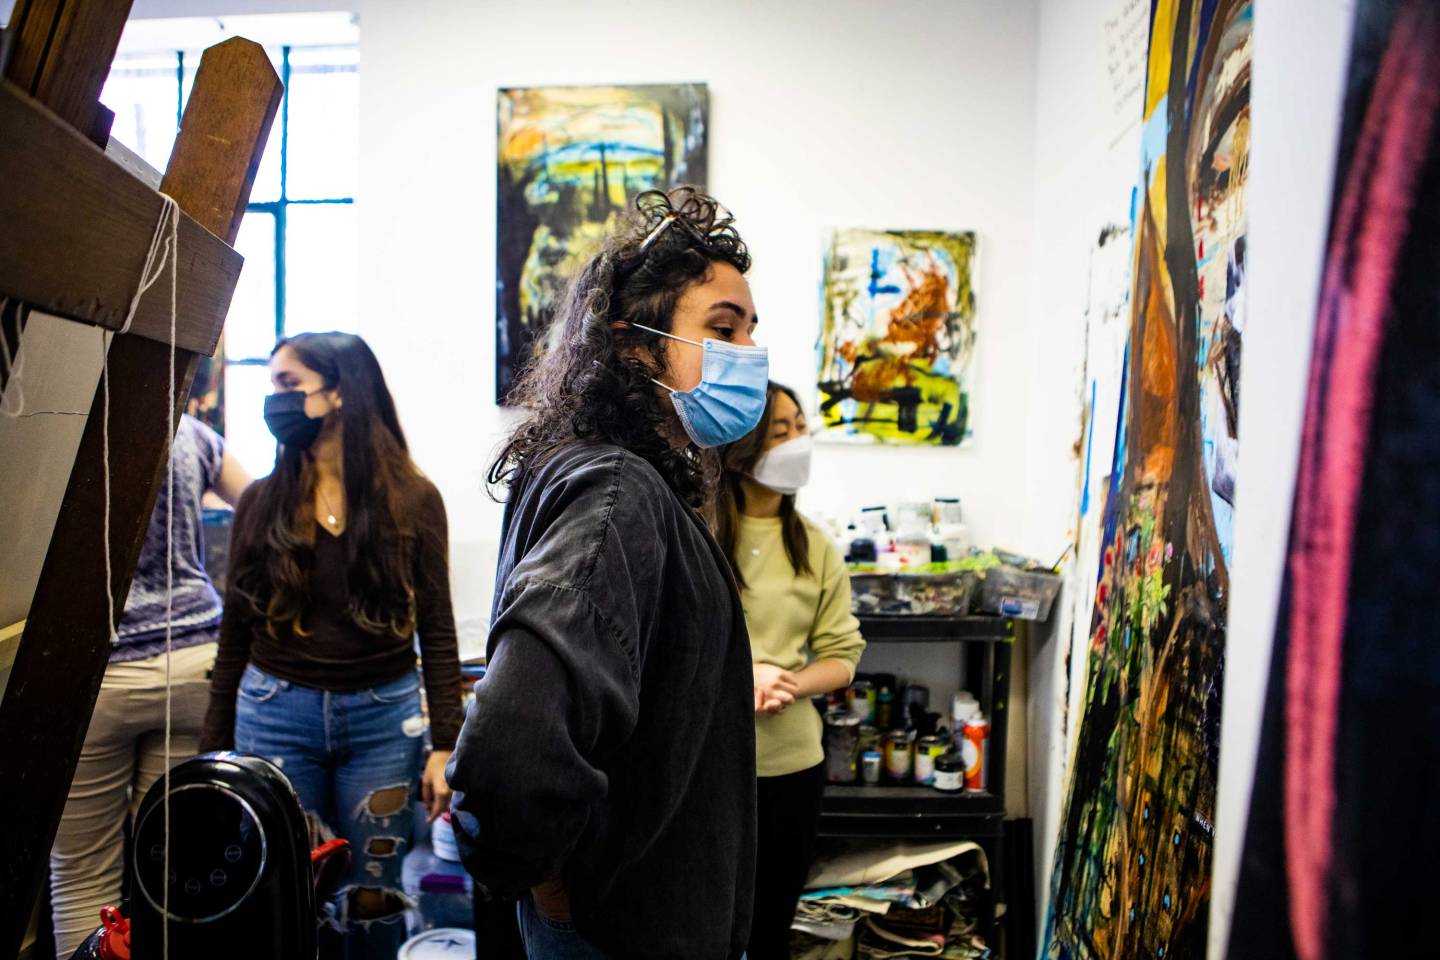 Students roam an artist's studio